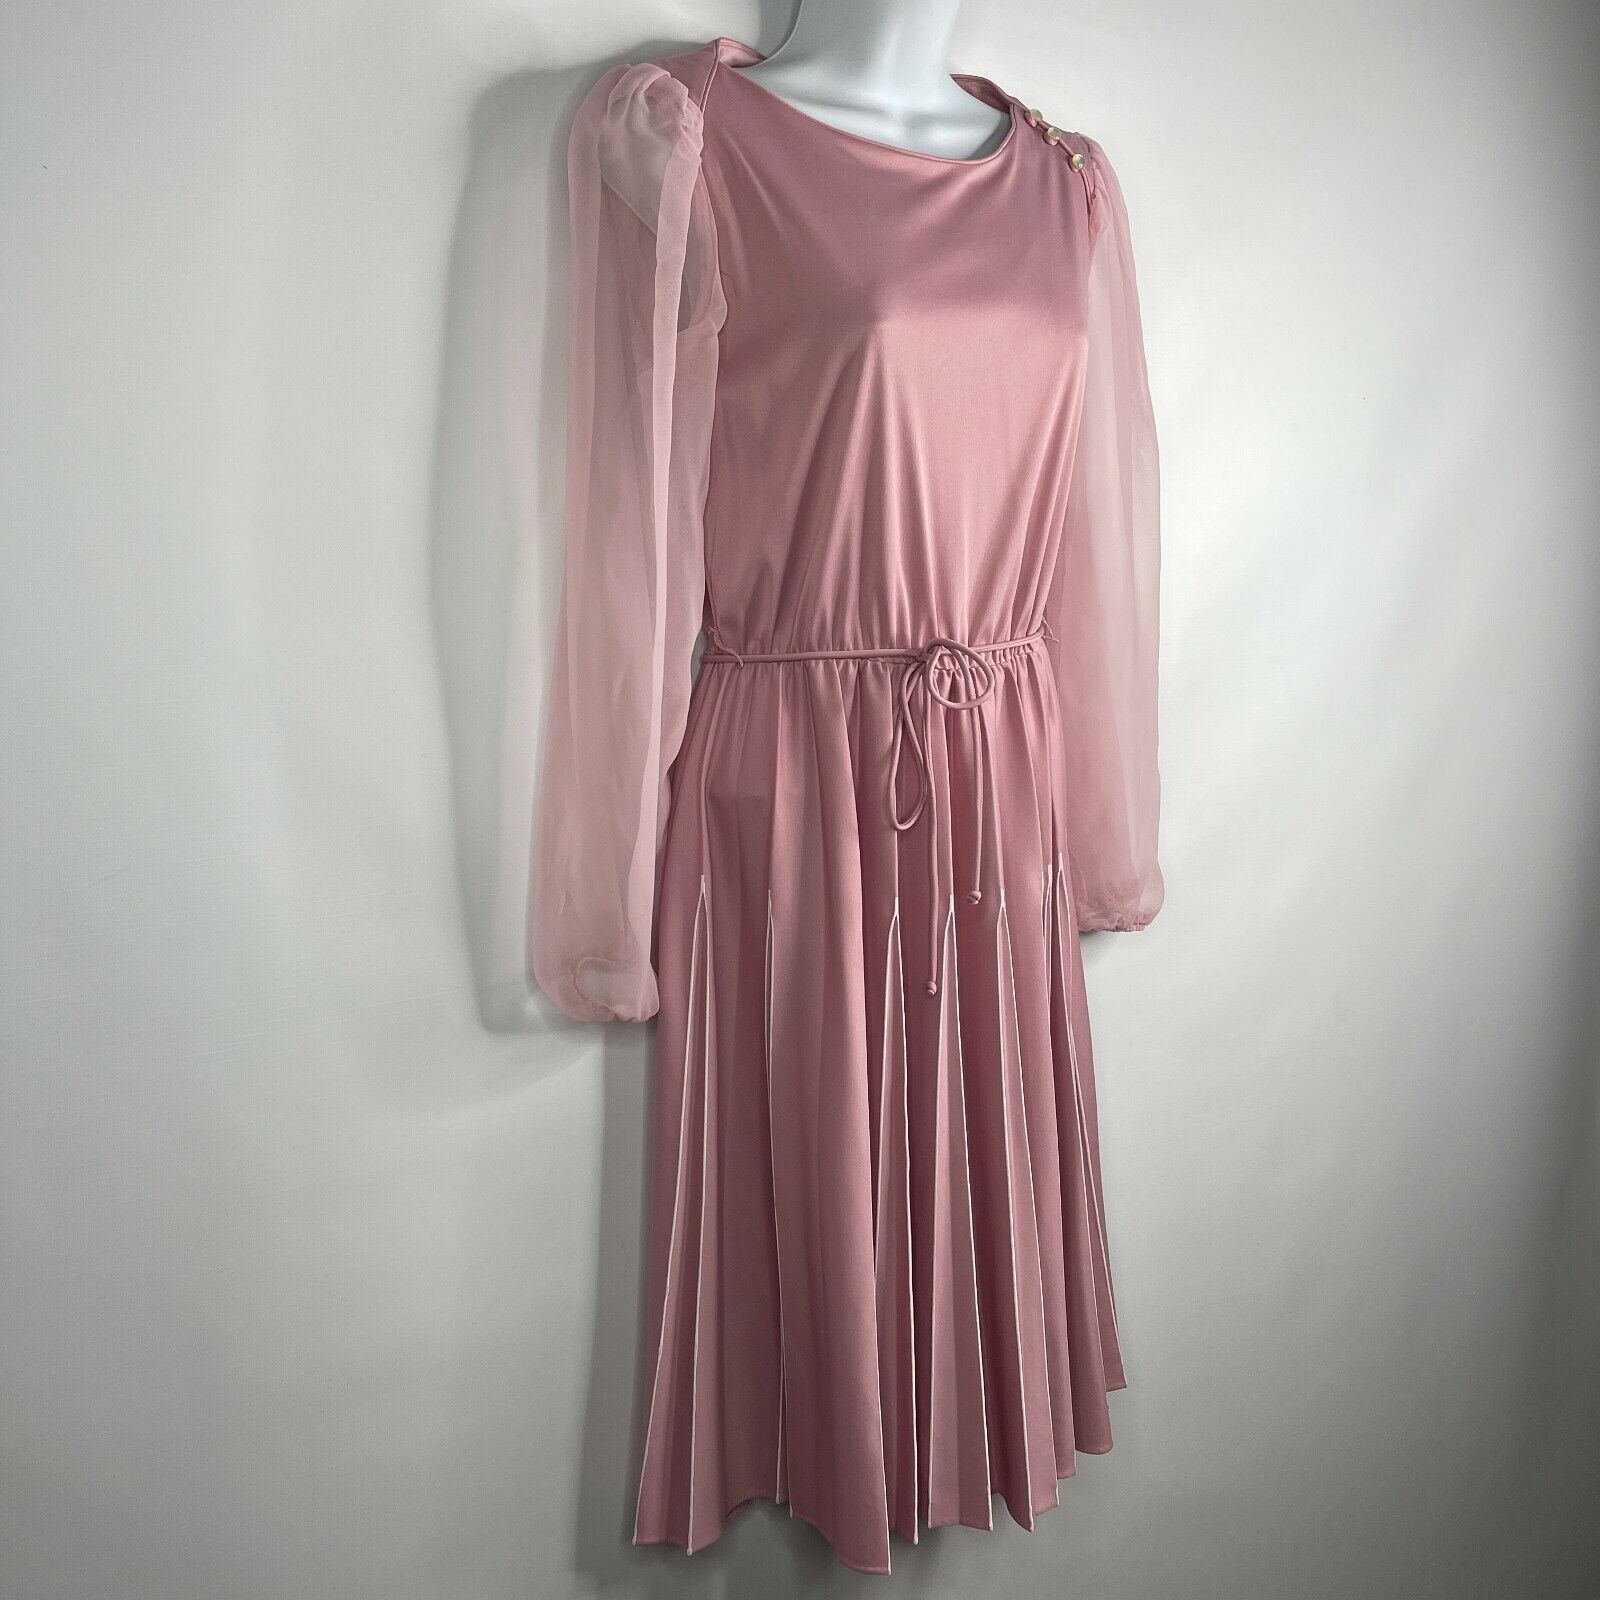 Vintage 70s Lavender Belted Contrast Stich Pleat Fit Flare Dress Size L / US 10 / IT 46 - 3 Thumbnail